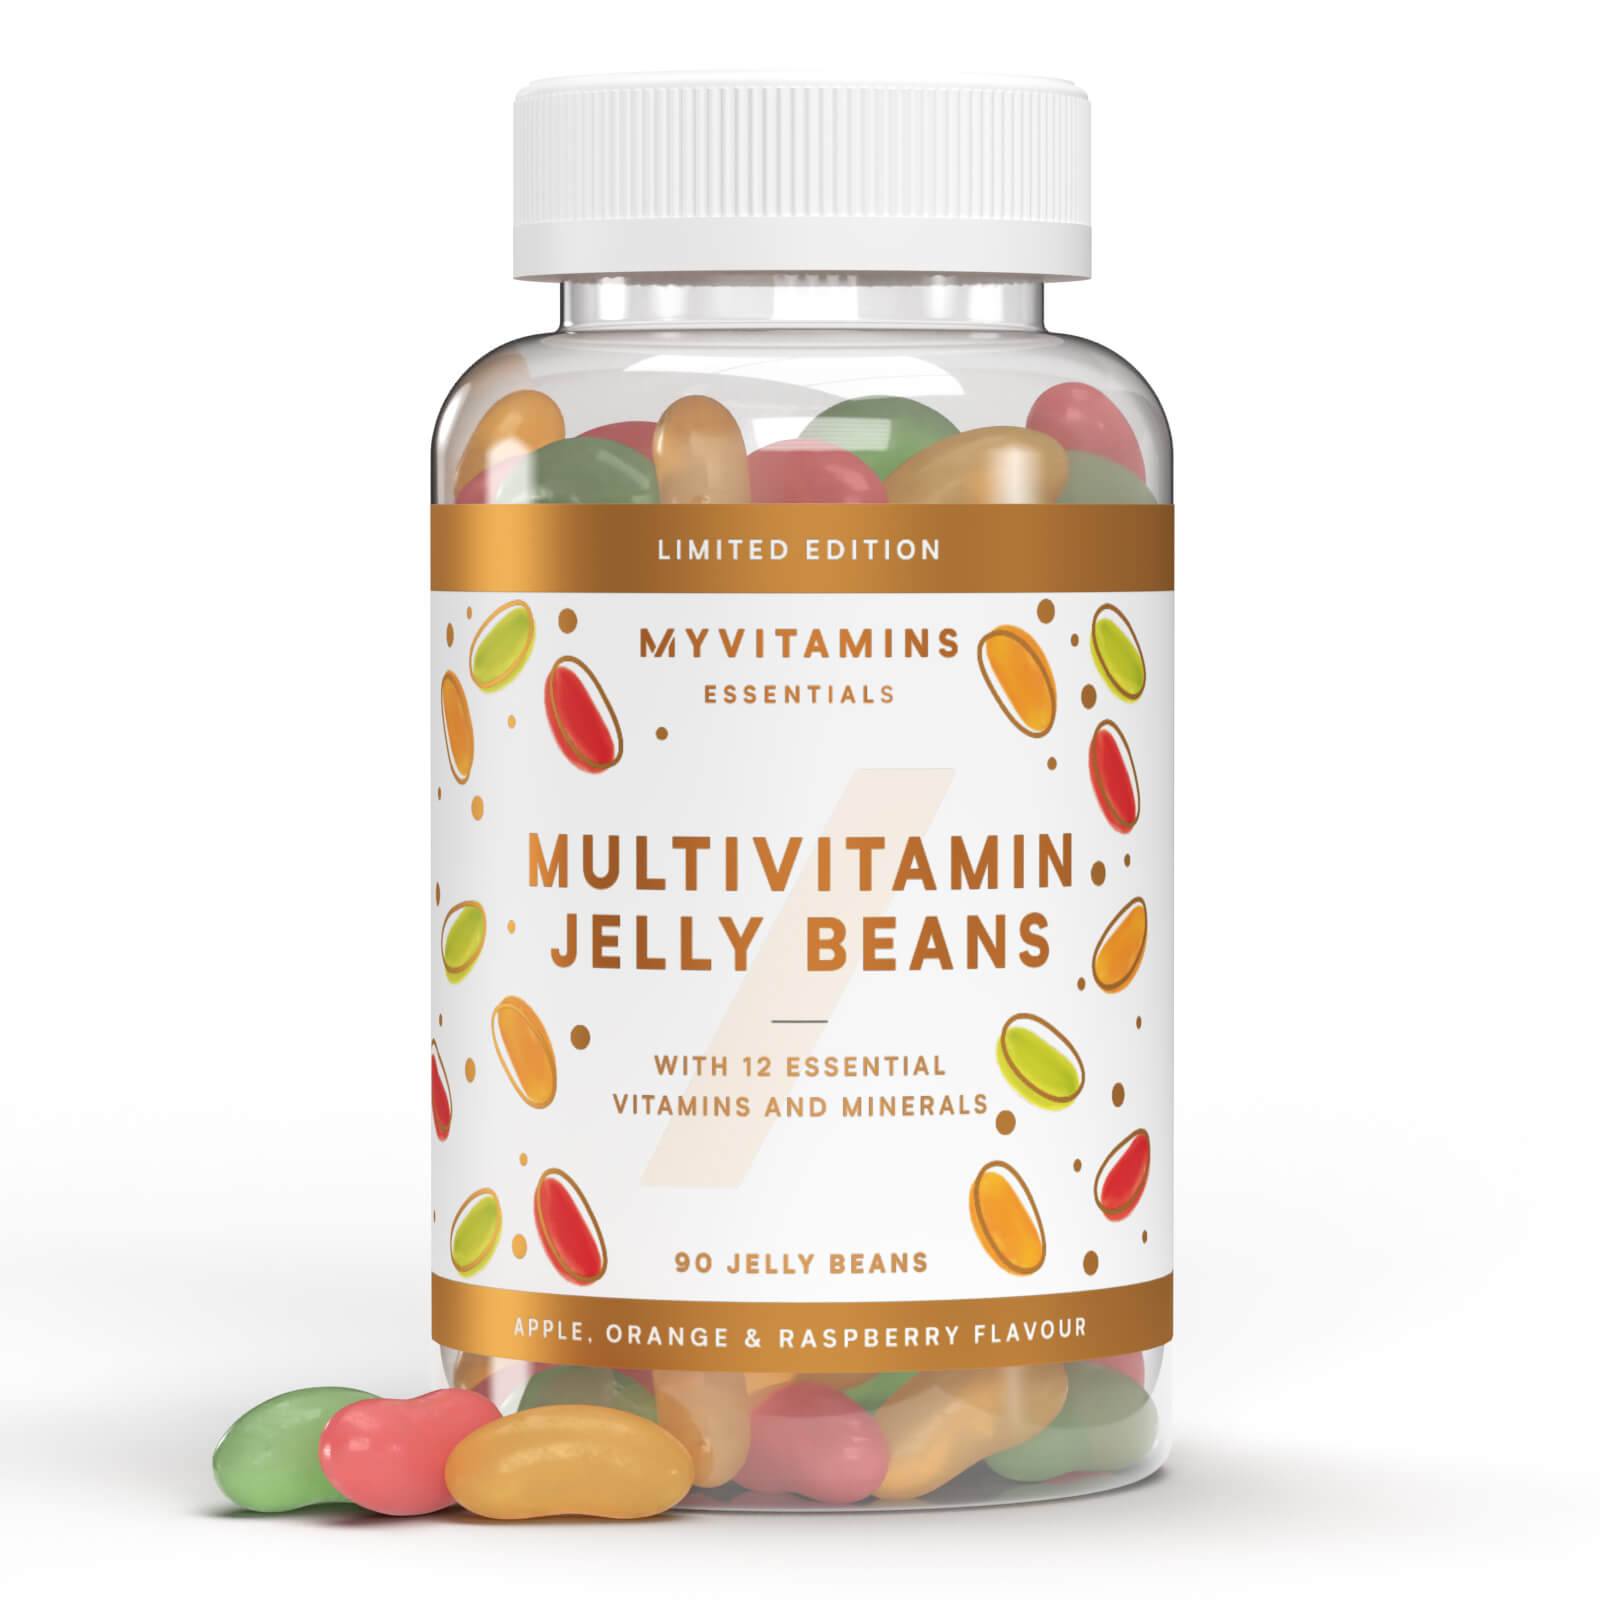 Multivitamin Jelly Beans (Limited Edition) - 30servings - Apple, Orange & Raspberry